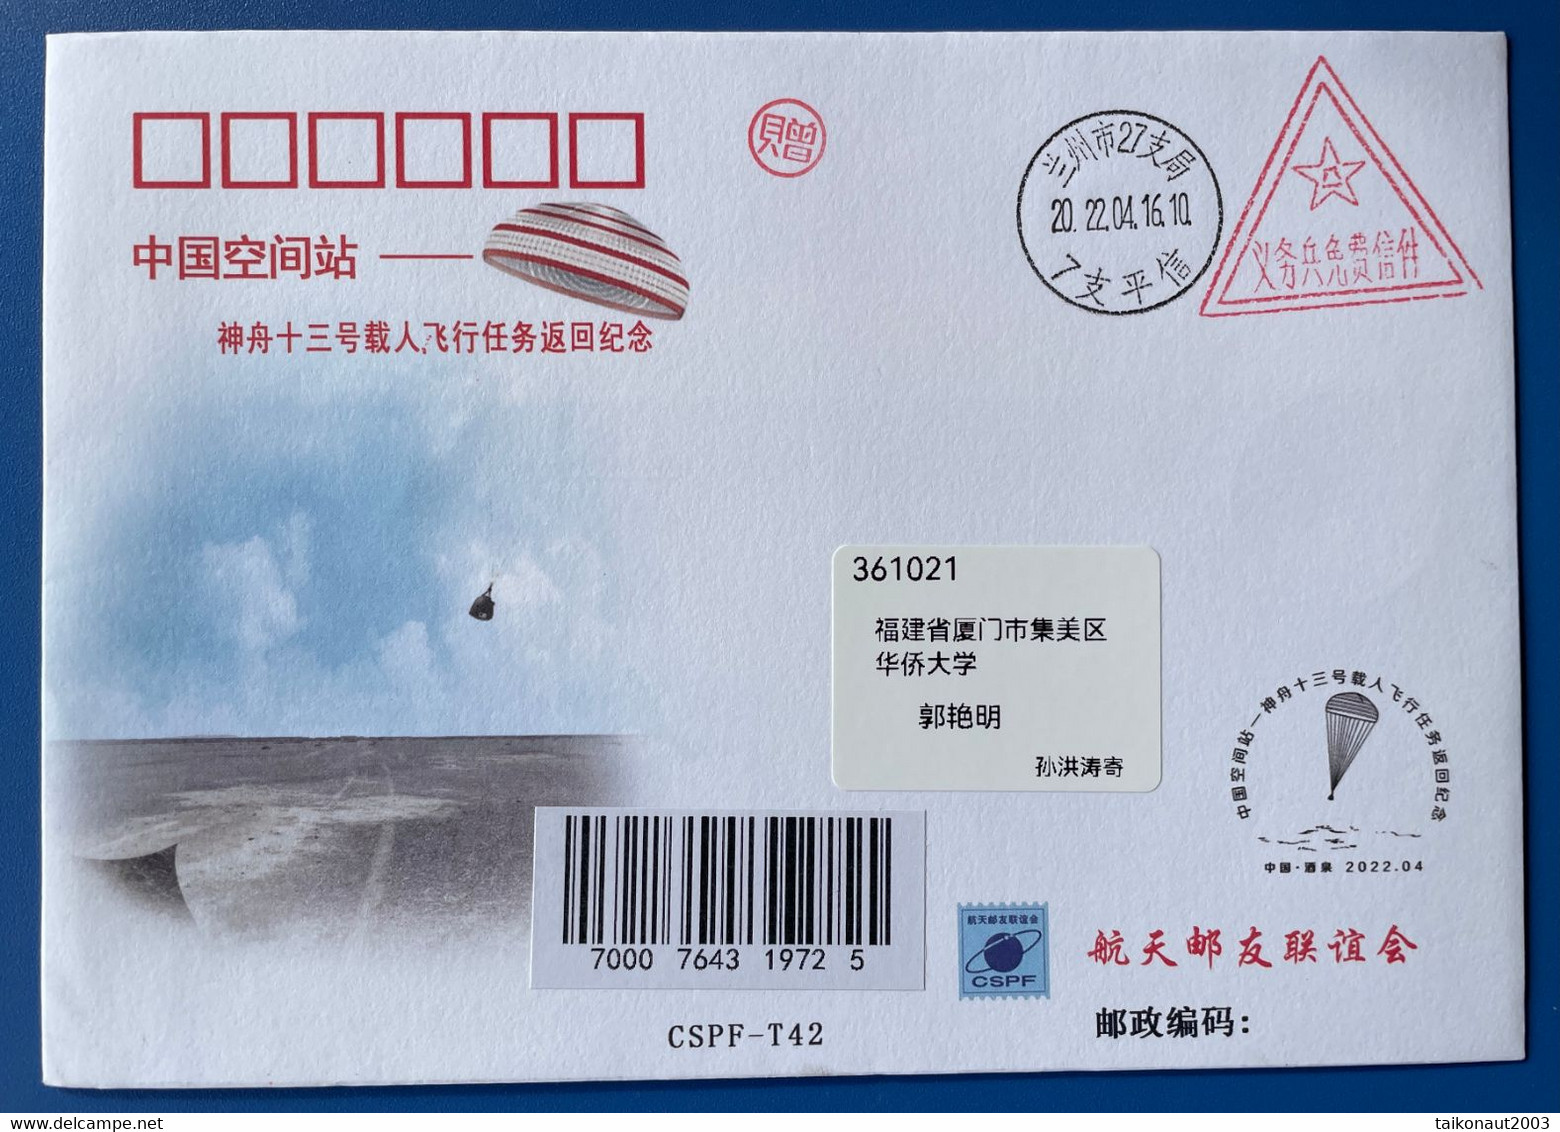 China Space 2022 Shenzhou-13 Manned Spaceship Landing Cover, Jiuquan Center - Asia